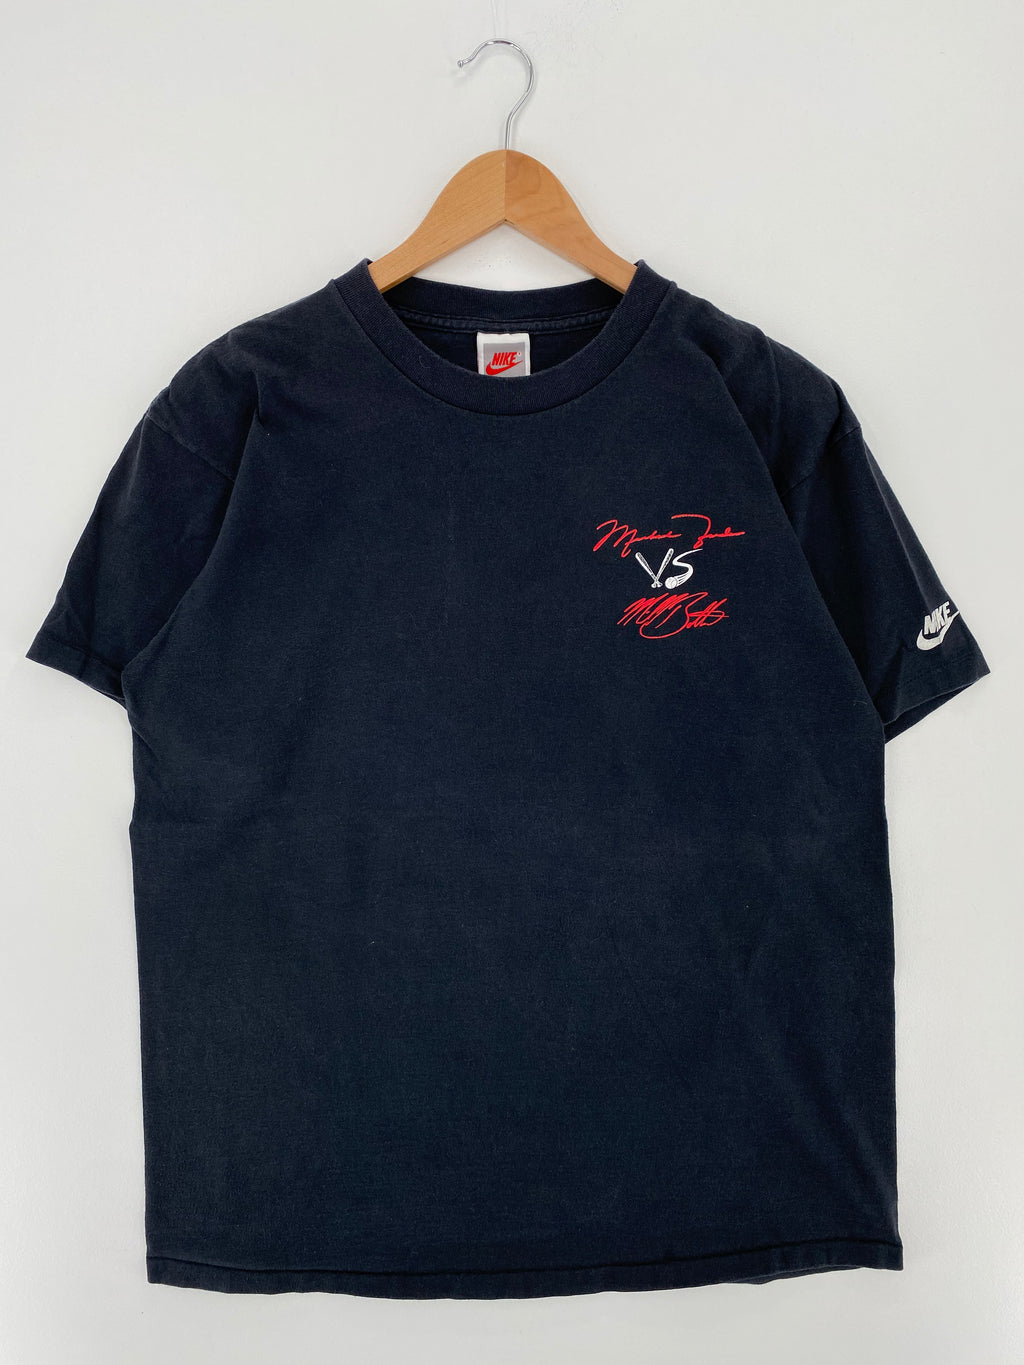 1993 NIKE Silver Tag MICHAEL JORDAN x MICHAEL BOLTON Made in USA Size XL Vintage T-shirts / Y556